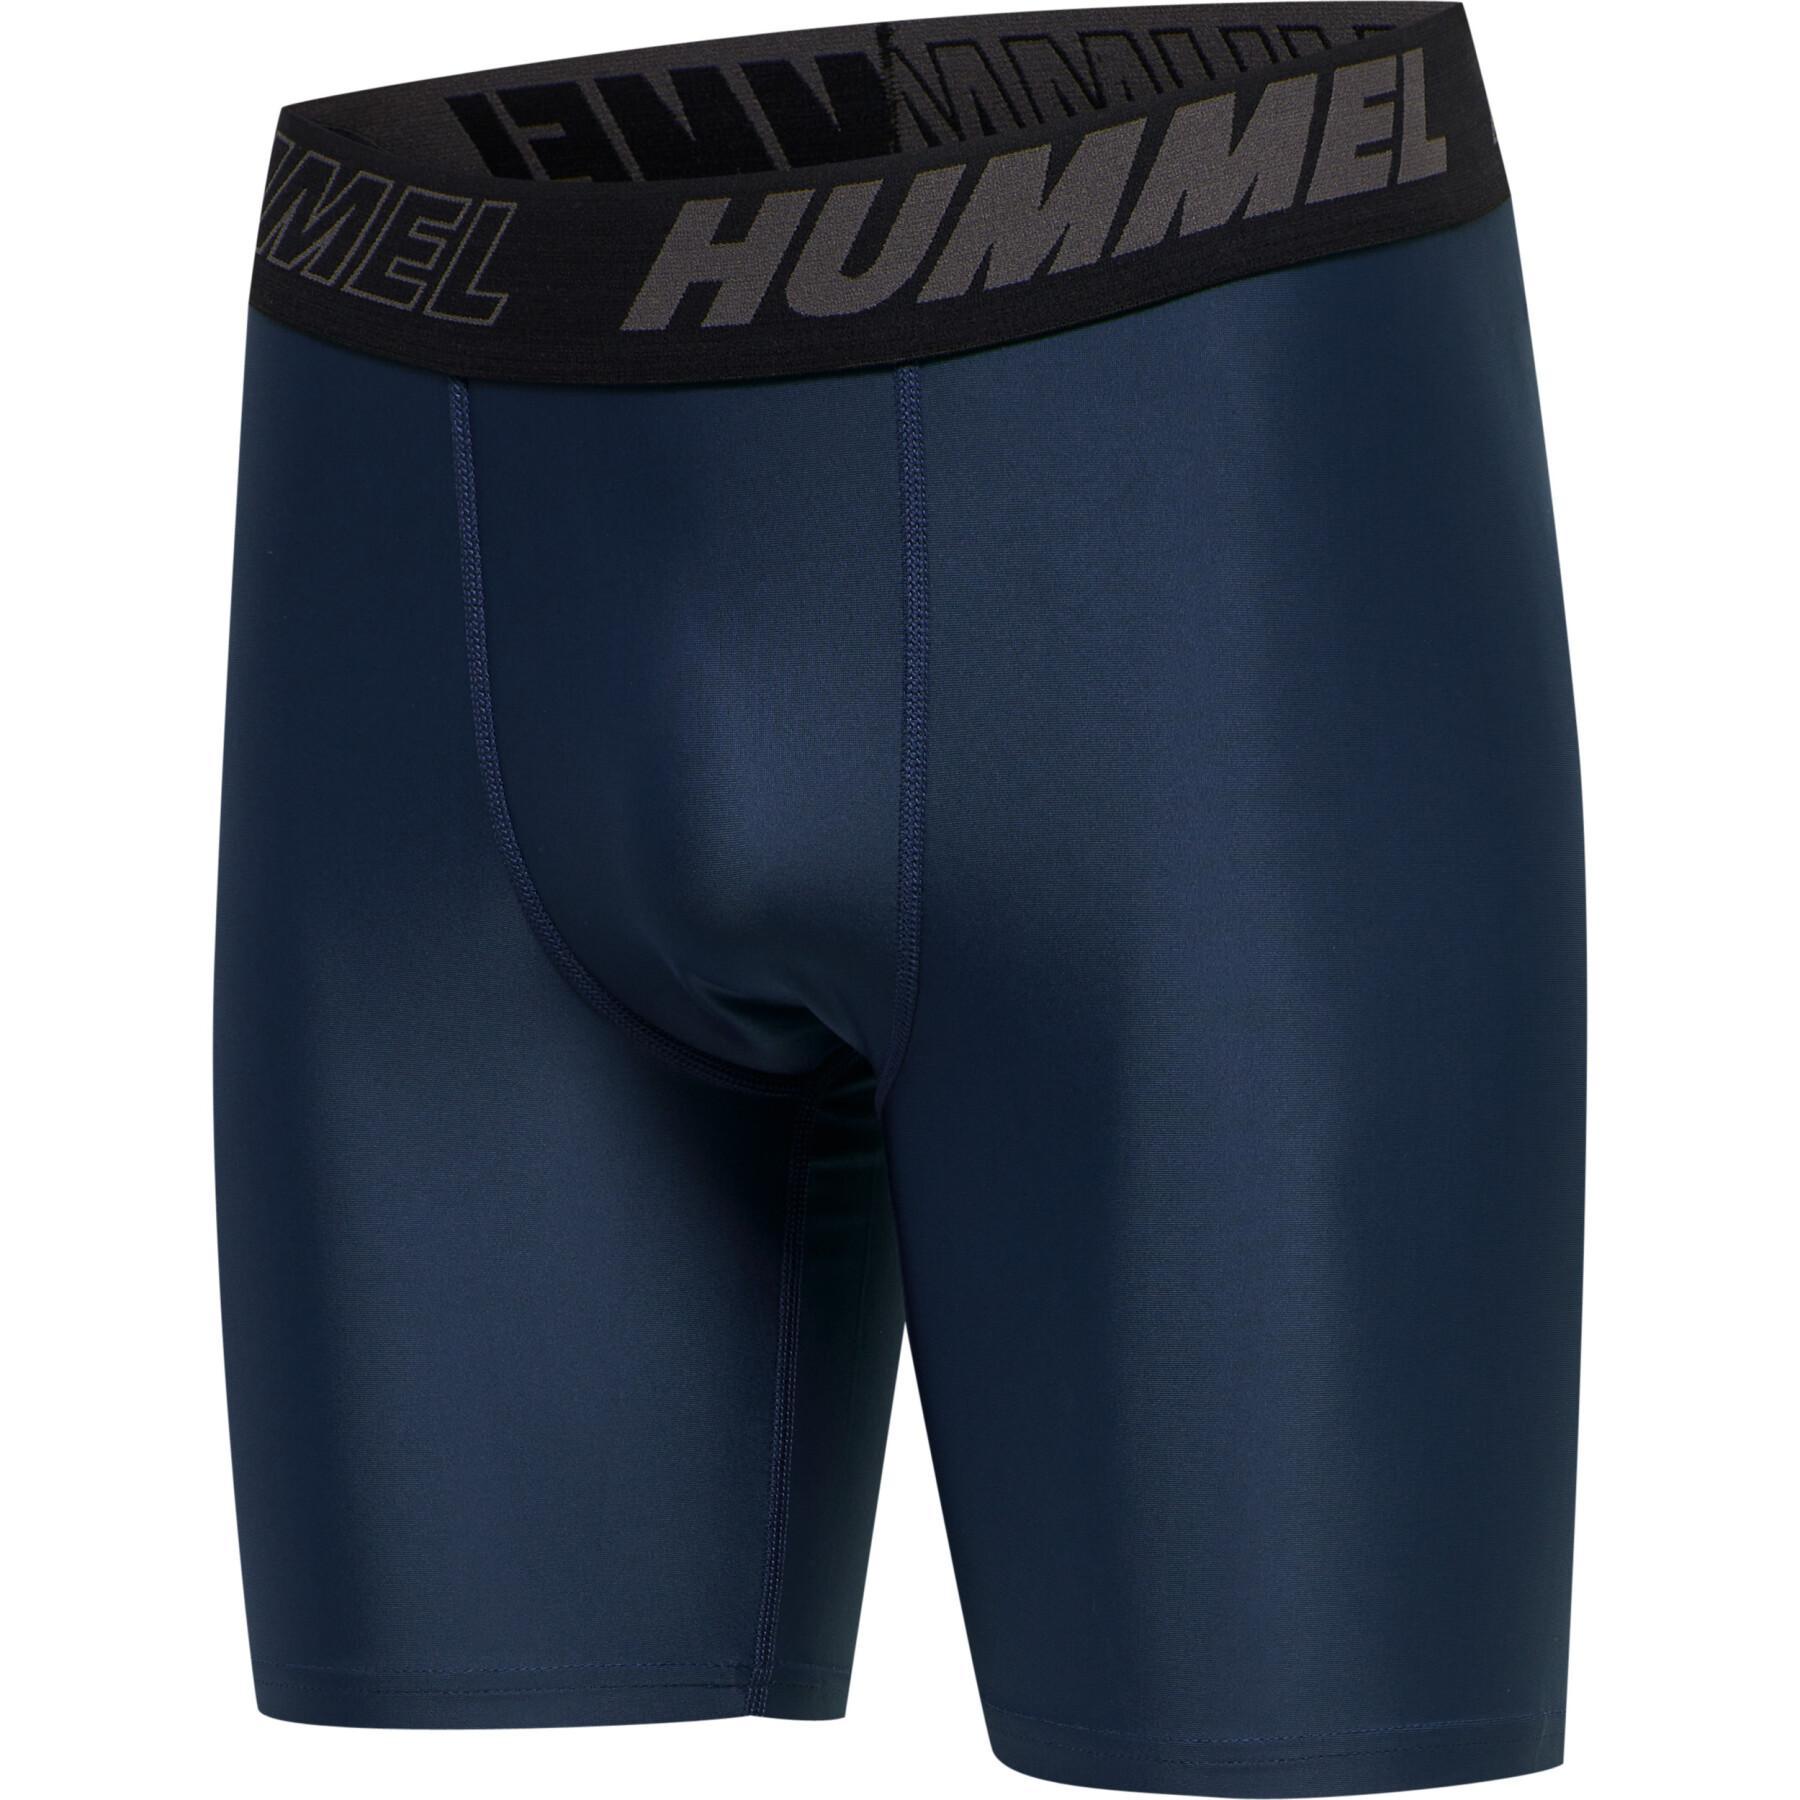 Pantalones cortos Hummel TE Topaz